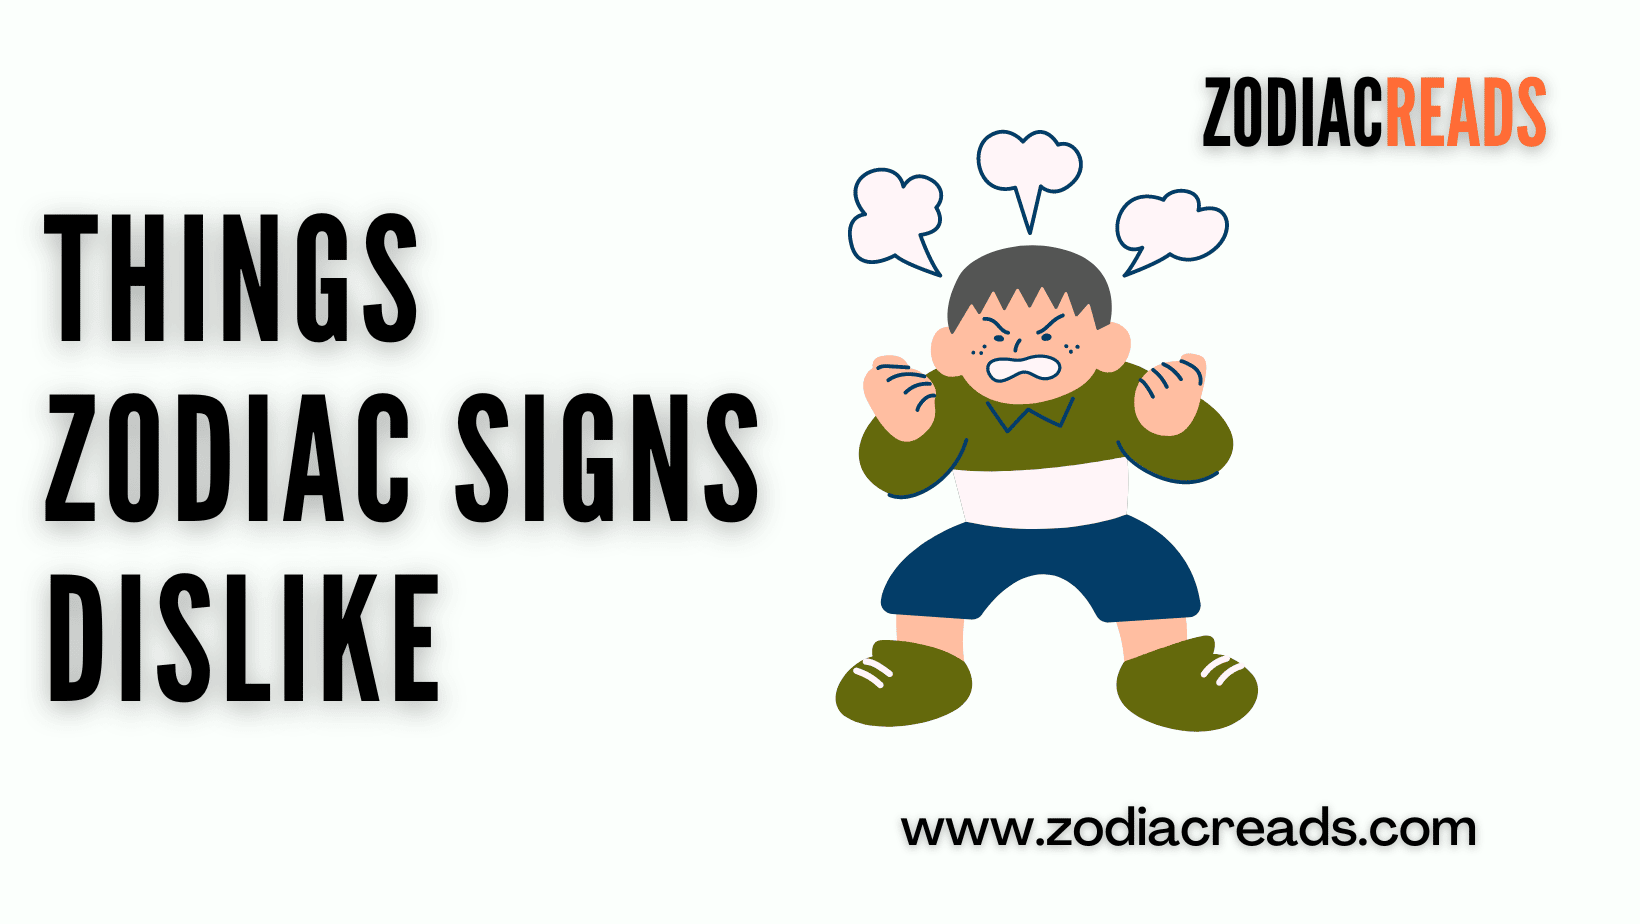 Things Zodiac Signs dislike